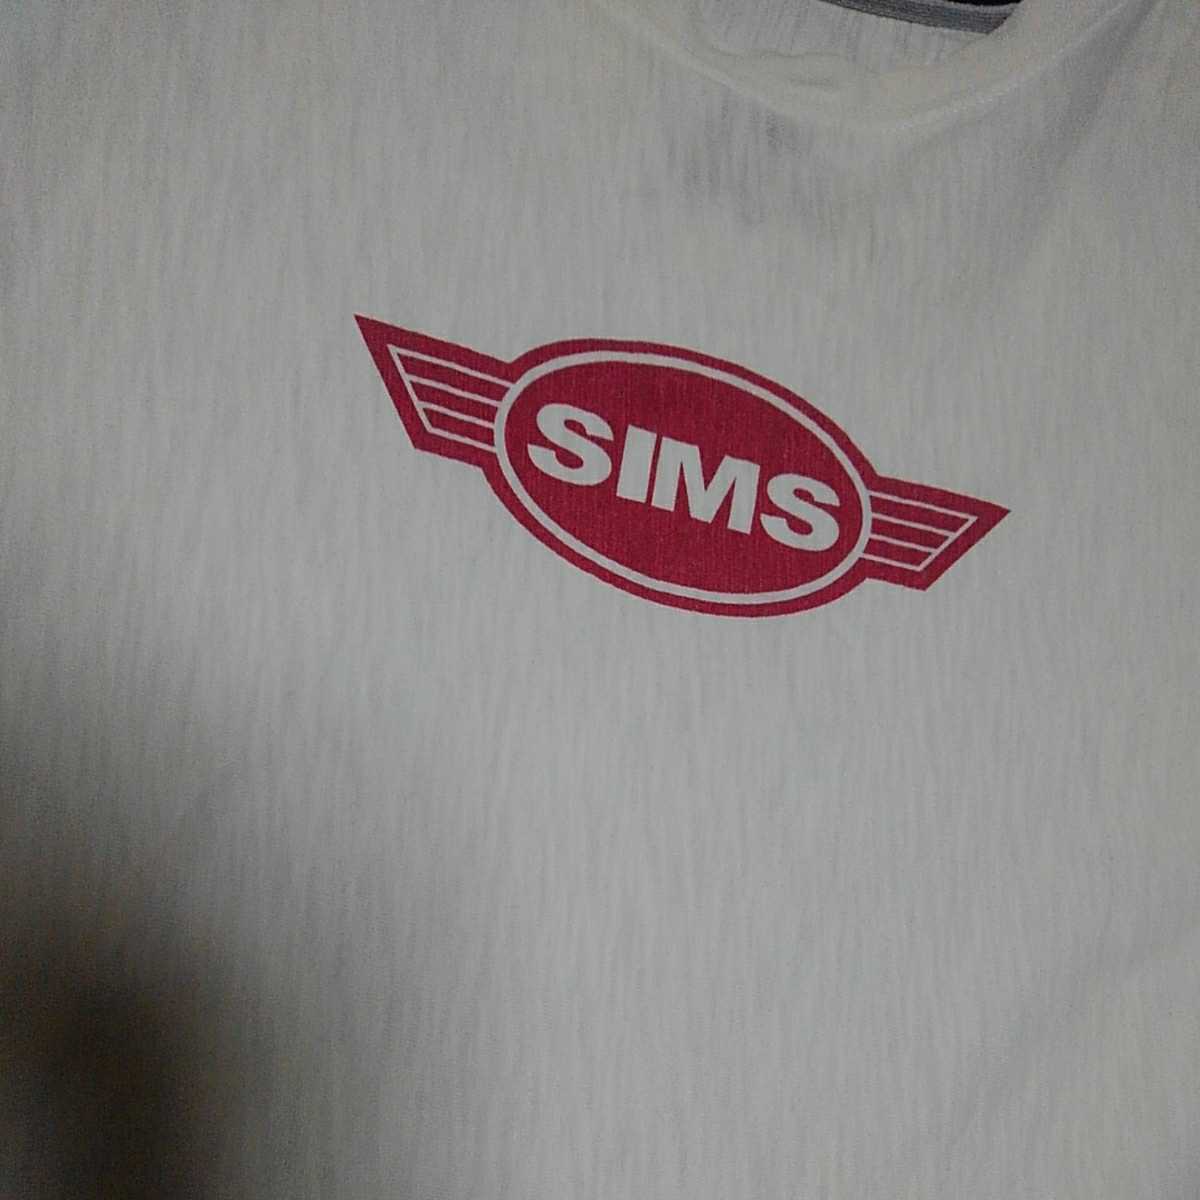  Syms SIMS старый Logo скейтборд скейтборд сноуборд сноуборд футболка редкий retro Old school старый Mark 